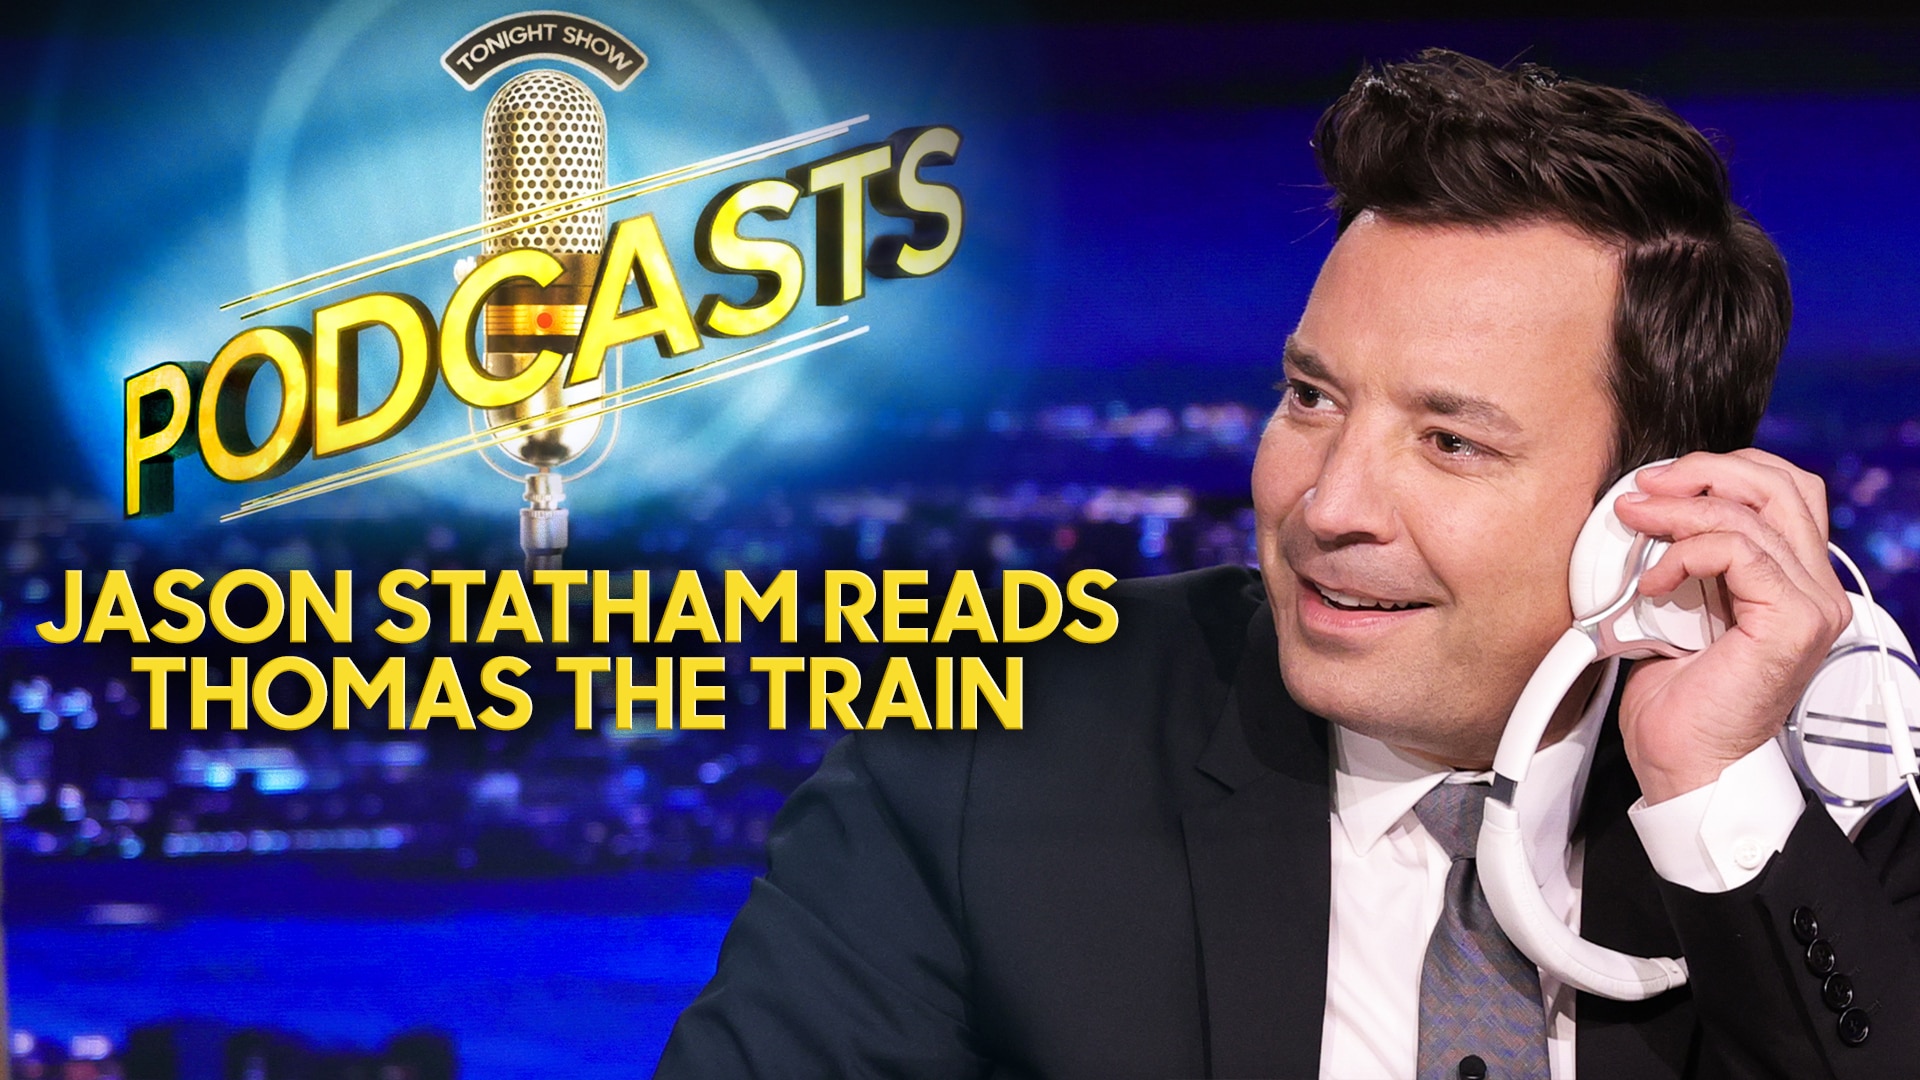 Watch The Tonight Show Starring Jimmy Fallon Highlight Tonight Show Podcasts Jason Statham